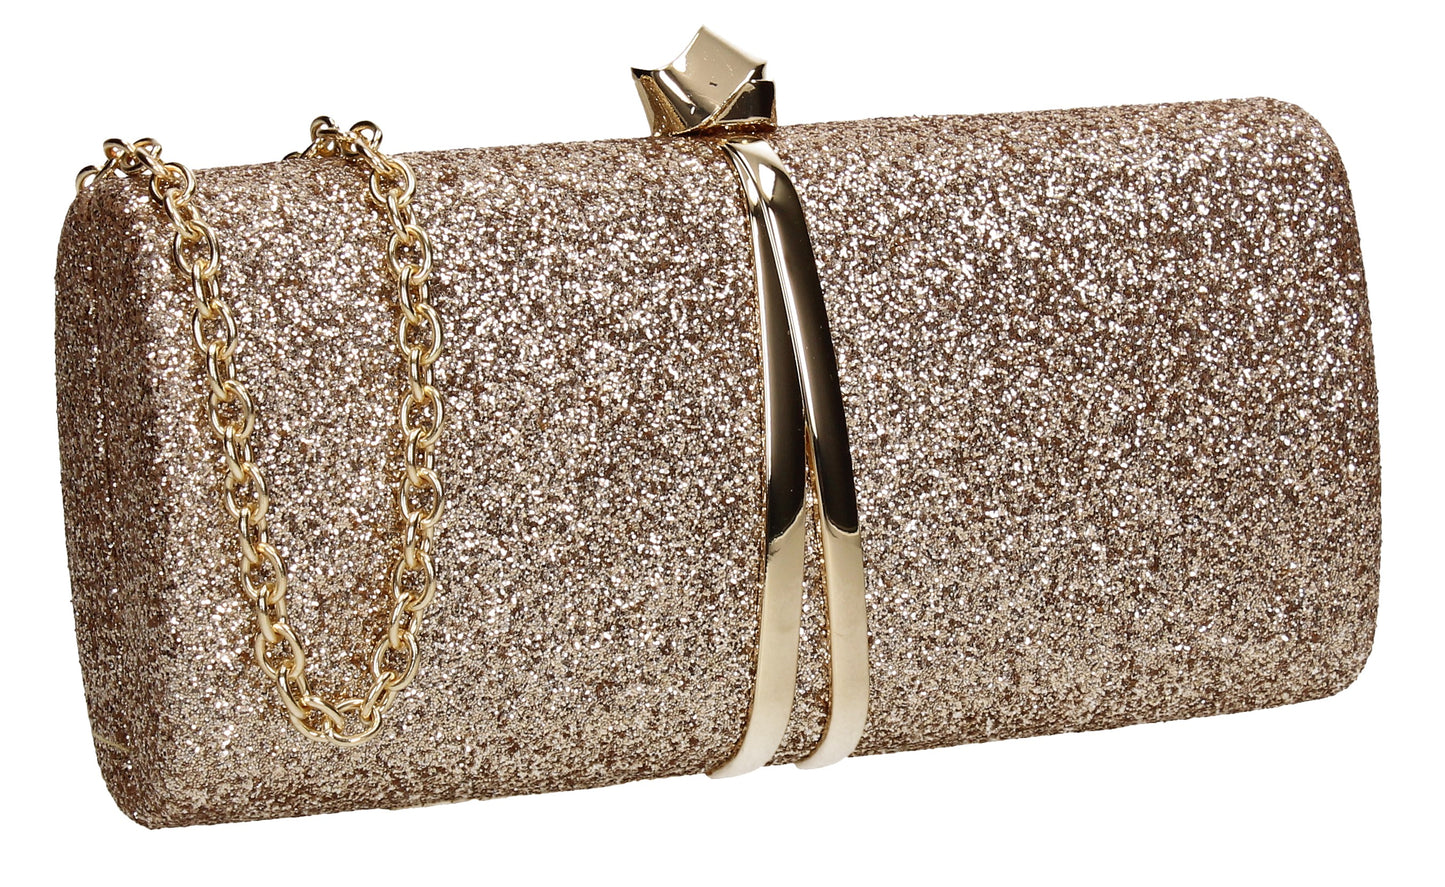 SWANKYSWANS Daisy Clutch Bag Gold Cute Cheap Clutch Bag For Weddings School and Work